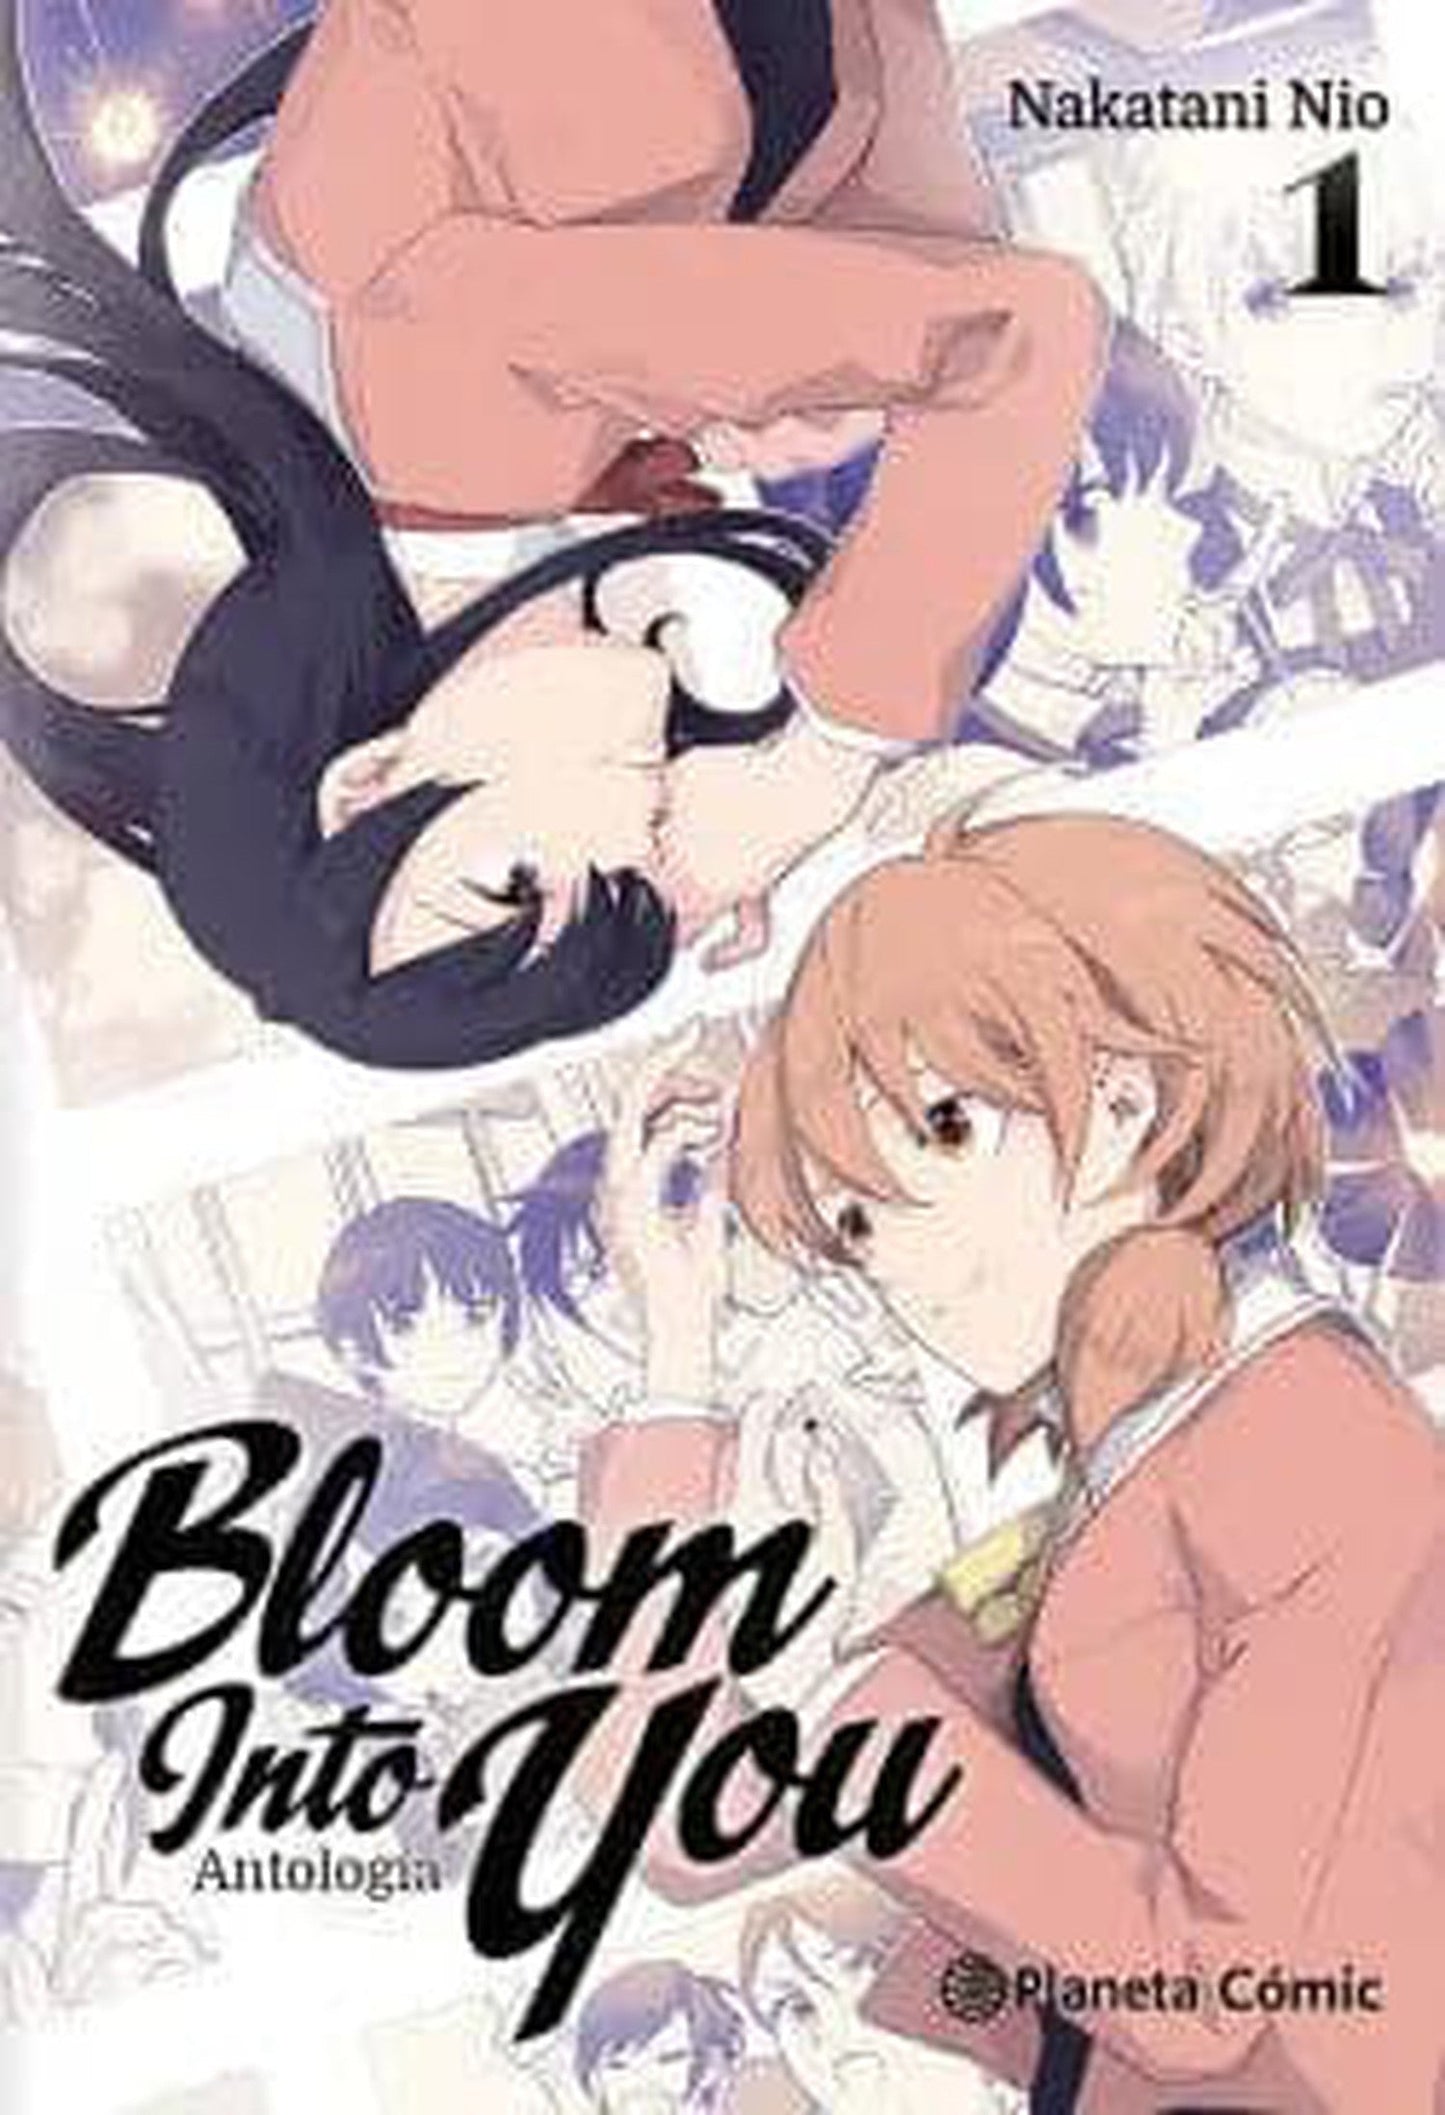 Bloom Into You antologia #1 Planeta ENcuadrocomics